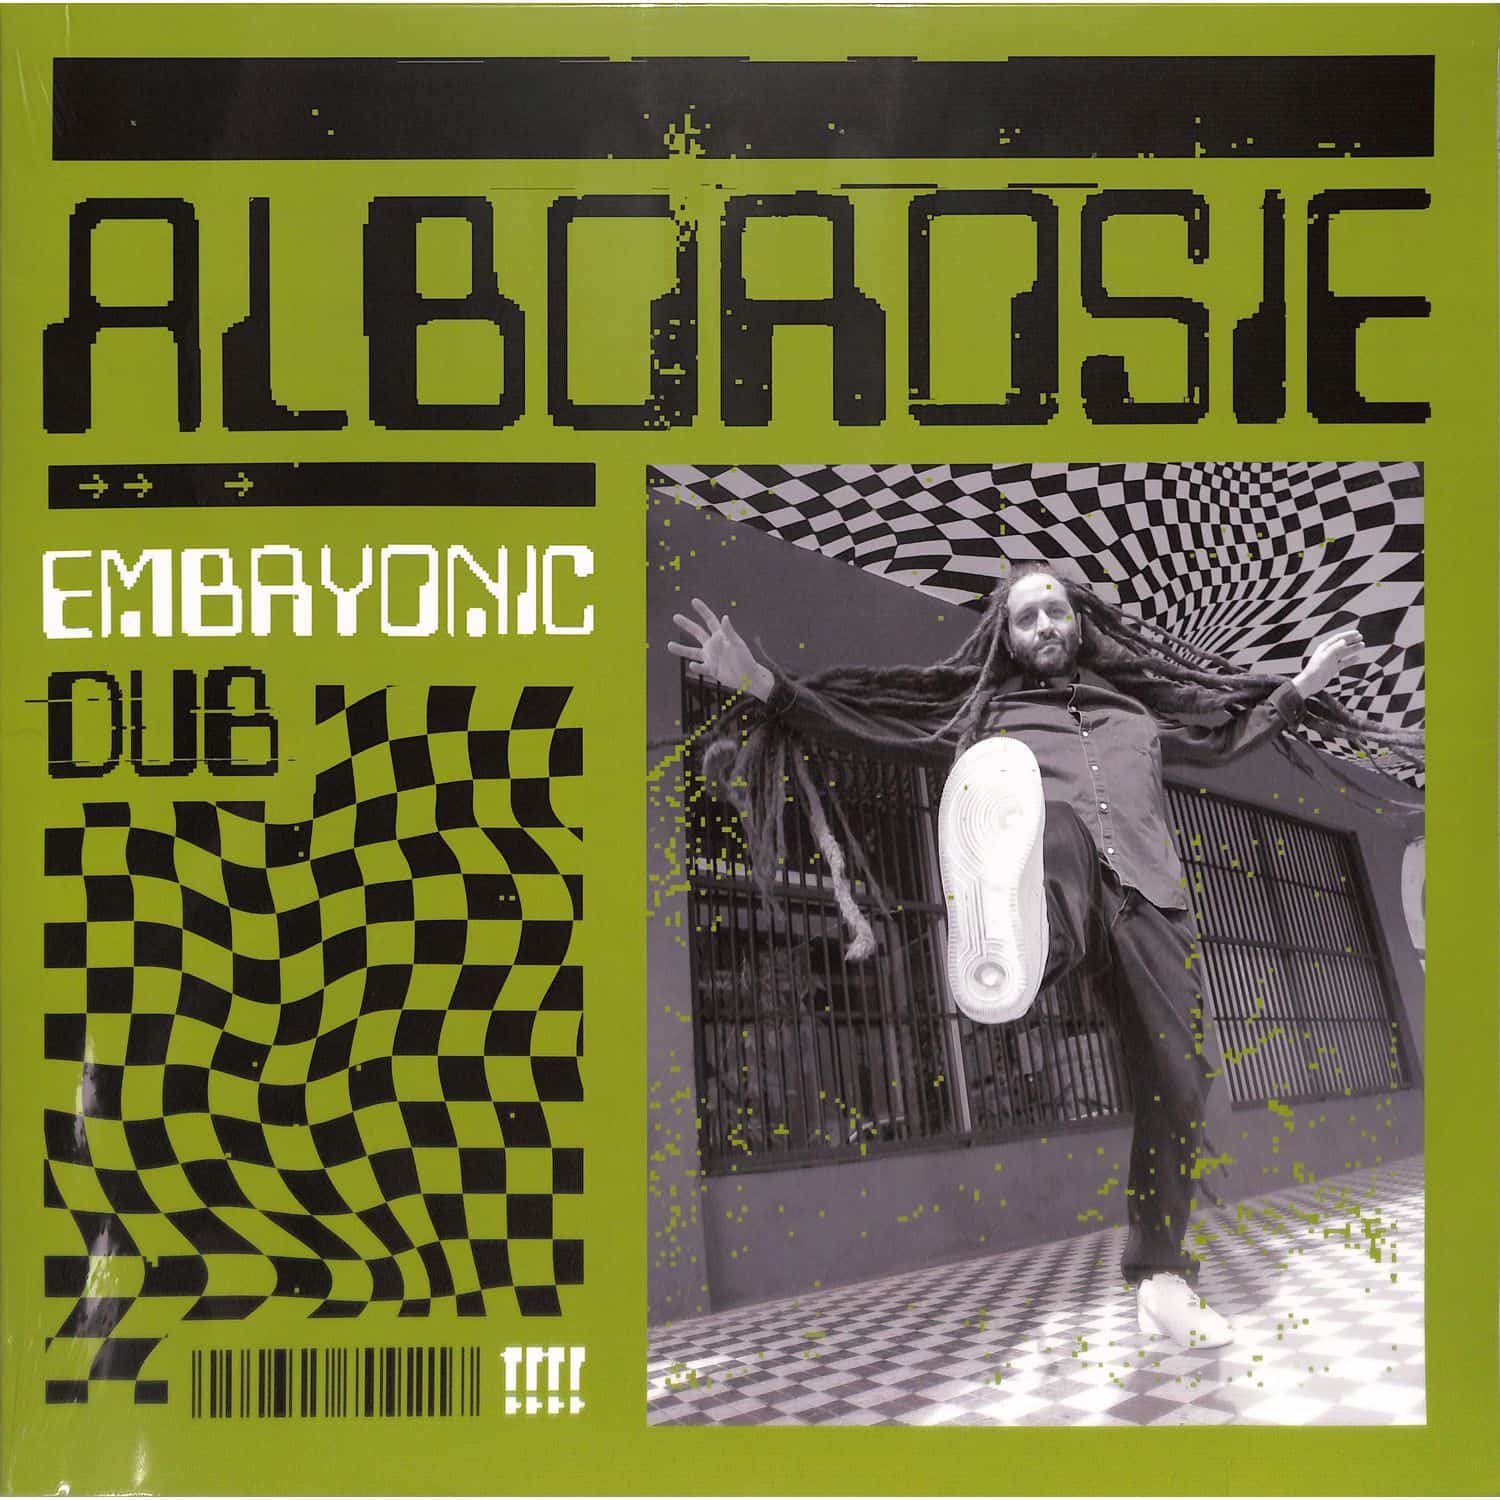 Alborosie - EMBRYONIC DUB 